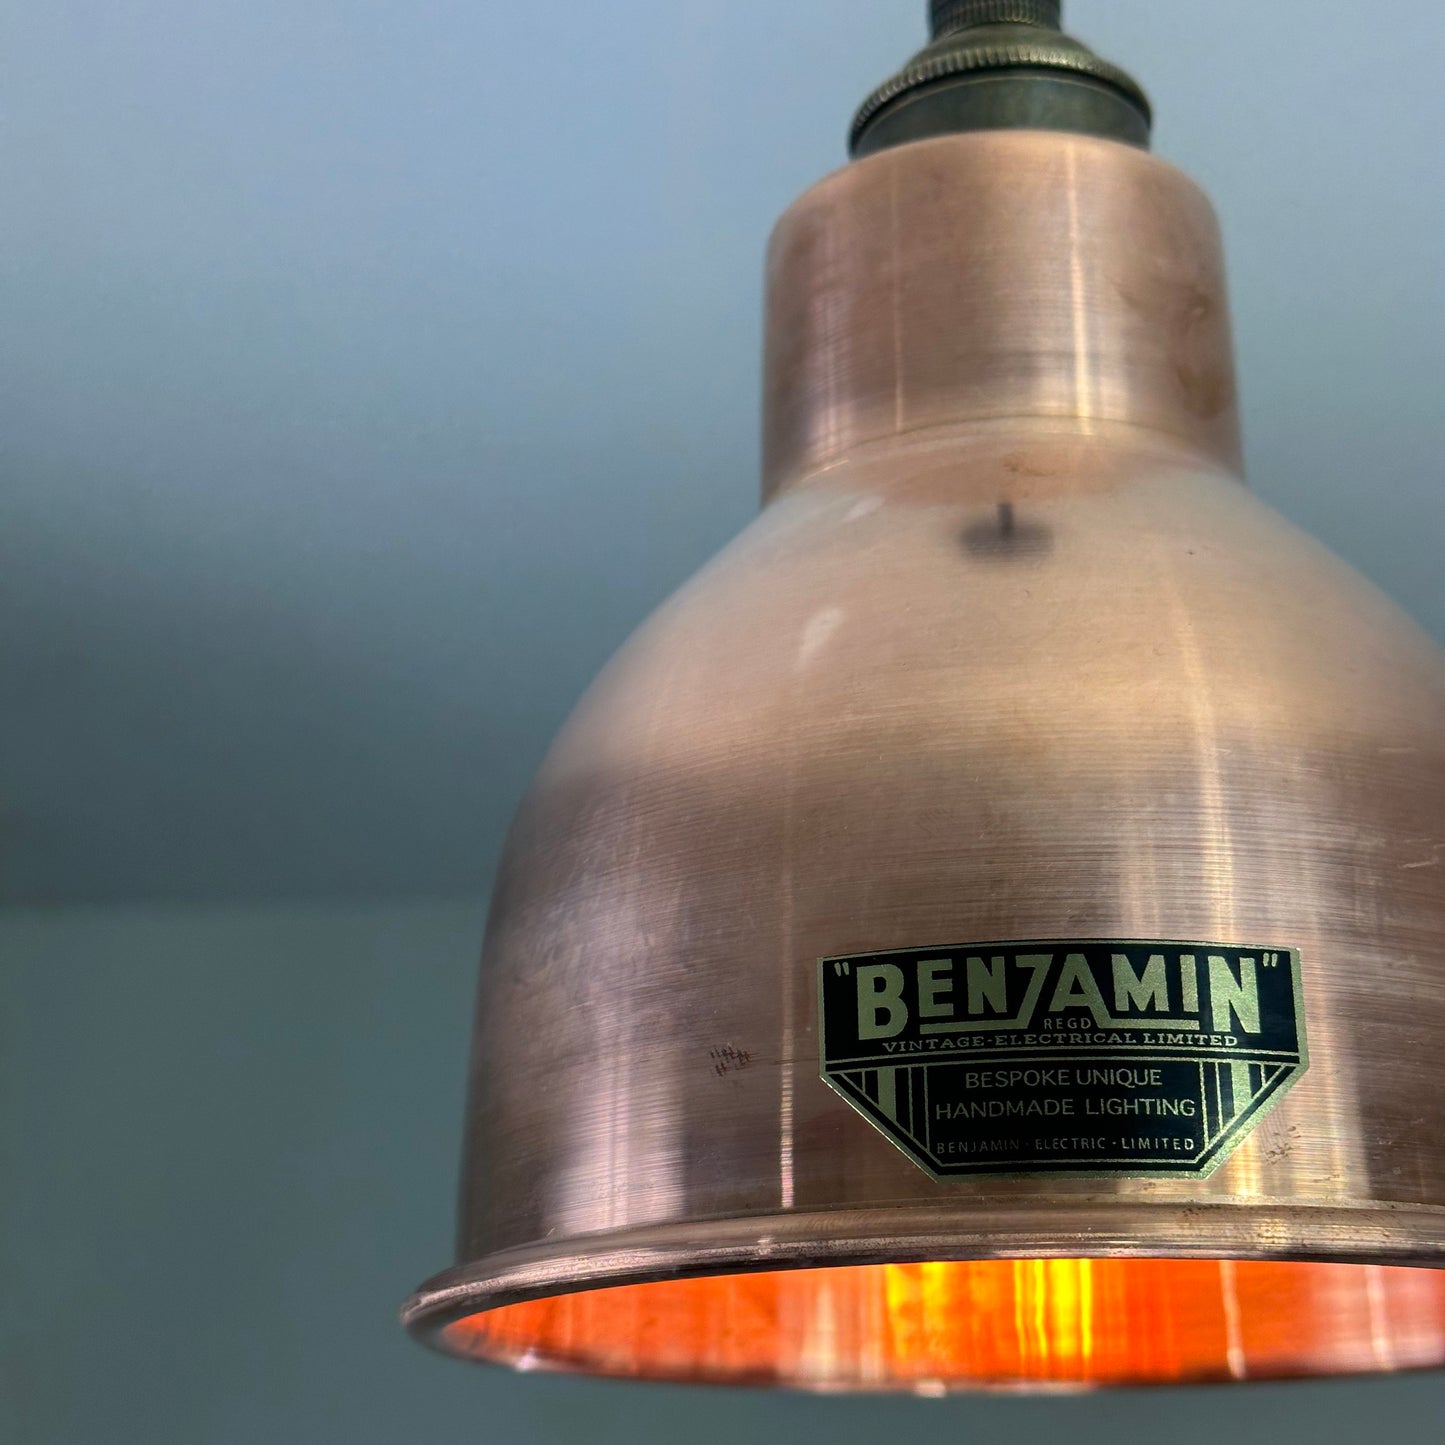 Metton ~ Copper Antique Patina Industrial “MEK” Shade Pendant Set Light | Ceiling Dining Room | Kitchen Table | Vintage Edison Filament Bulb